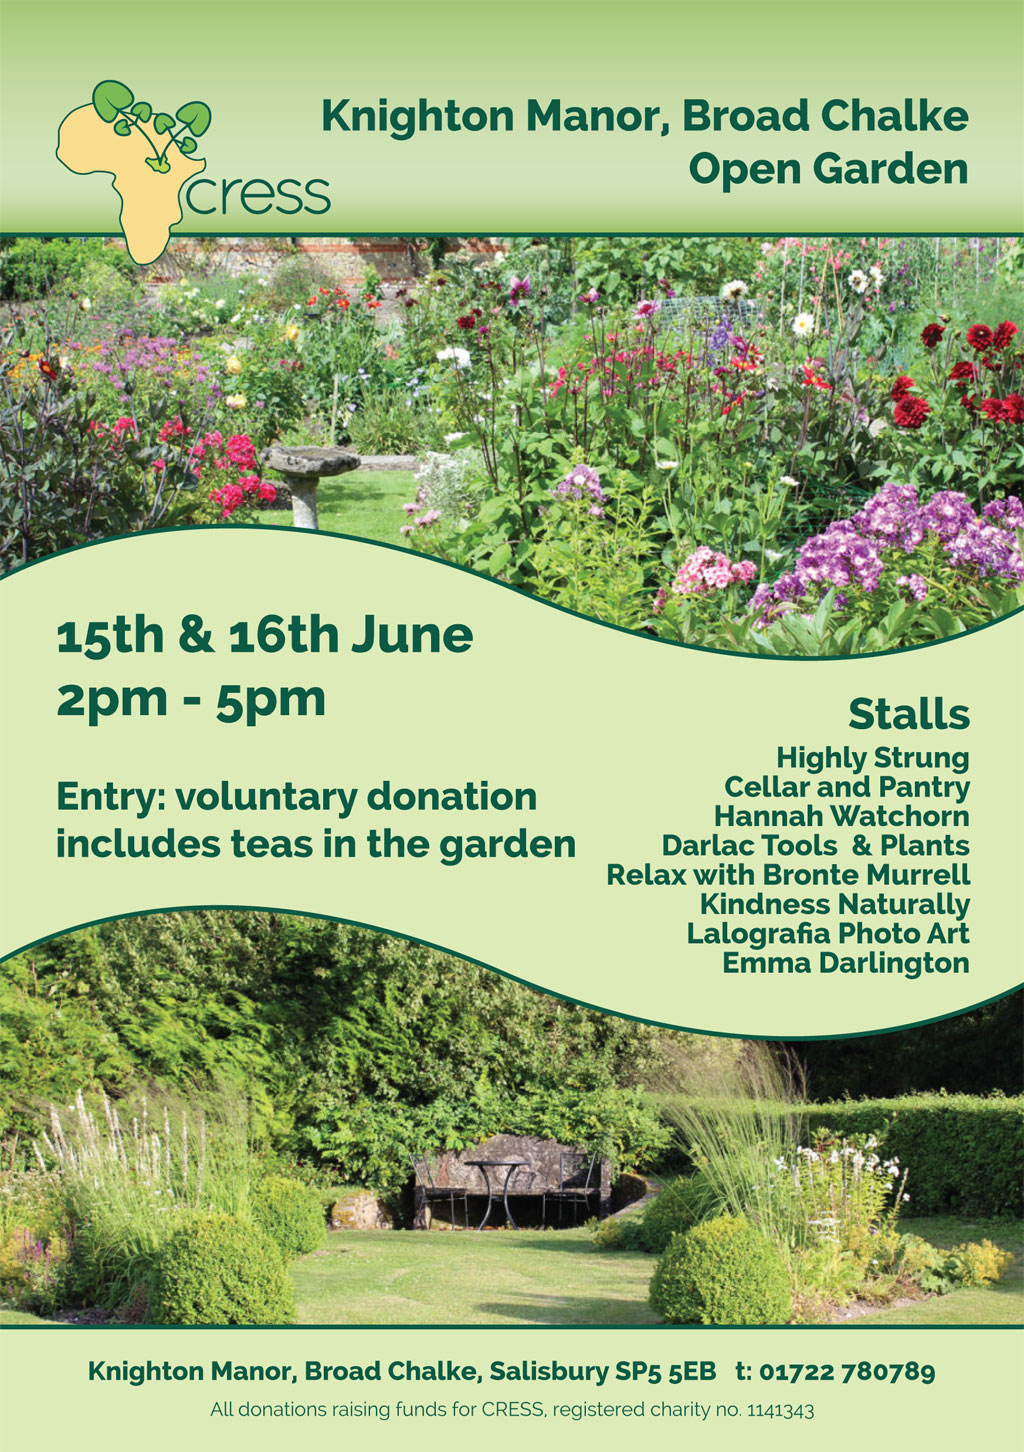 Open Garden - Knighton Manor - June 15th & 16th 2019